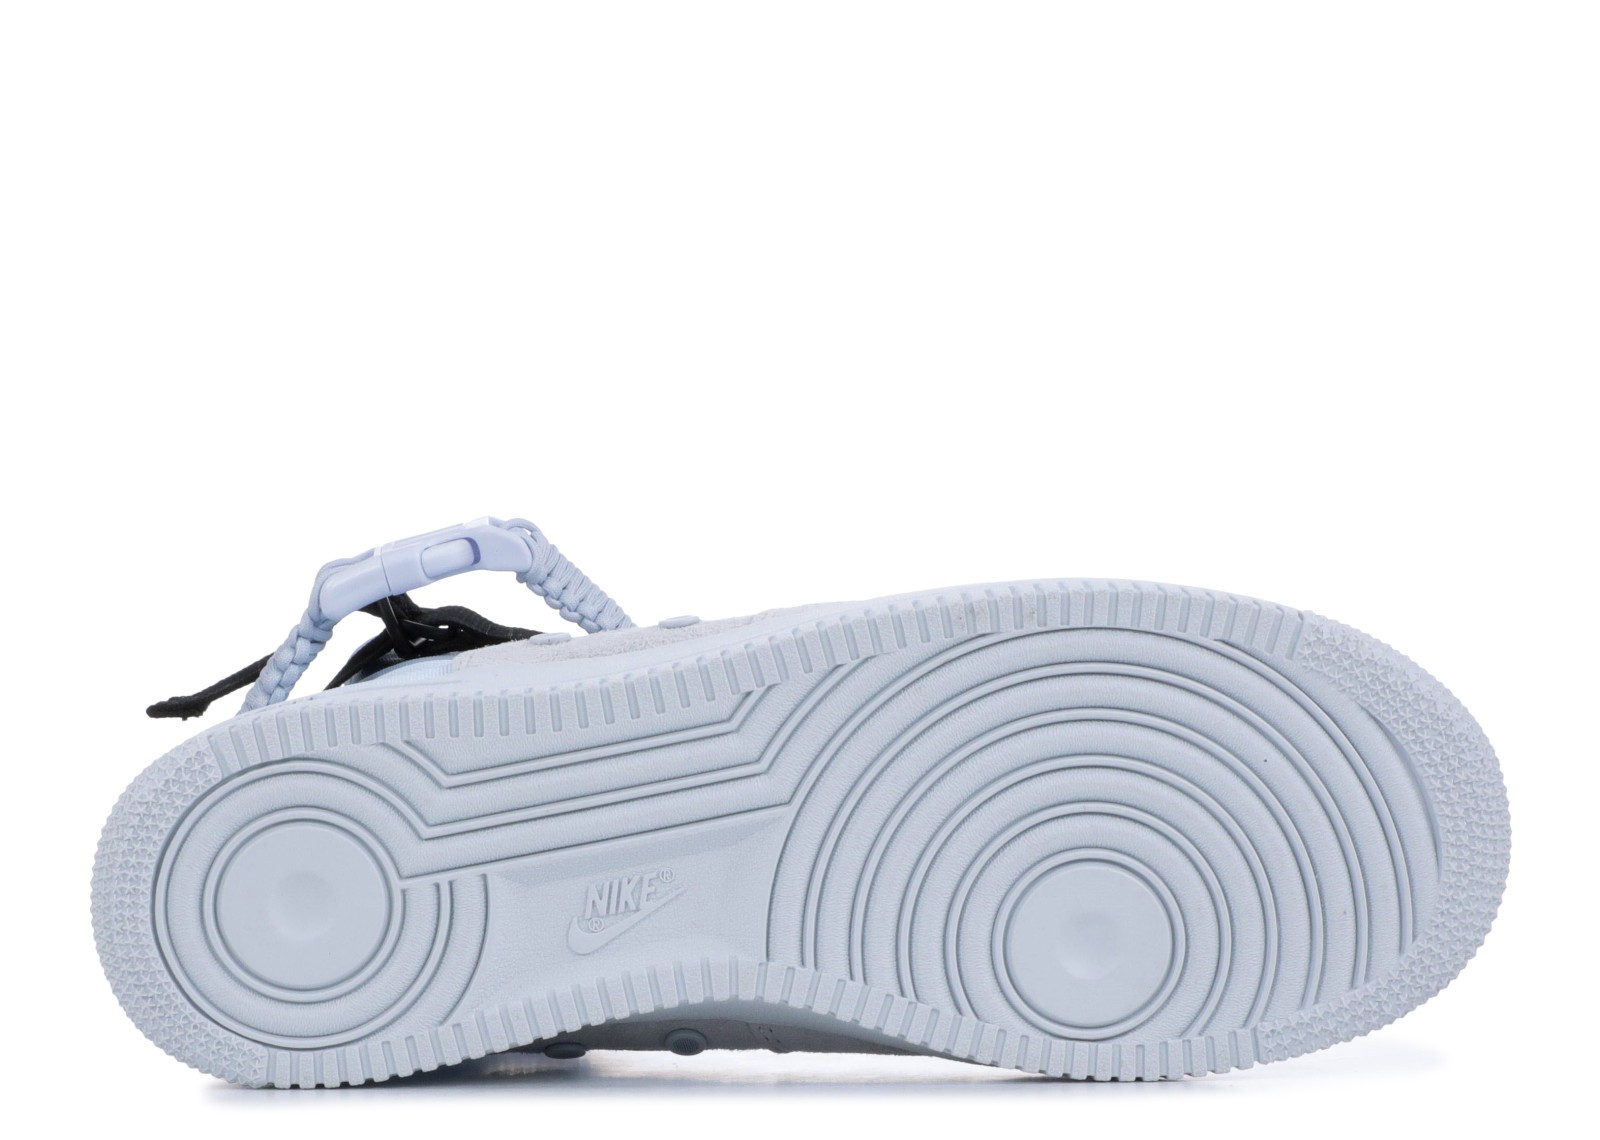 Nike Dunk Low Harvest Moon Coming Soon Spiffy - SF AF1 High Blue Tint 864024 - 402 - GmarShops